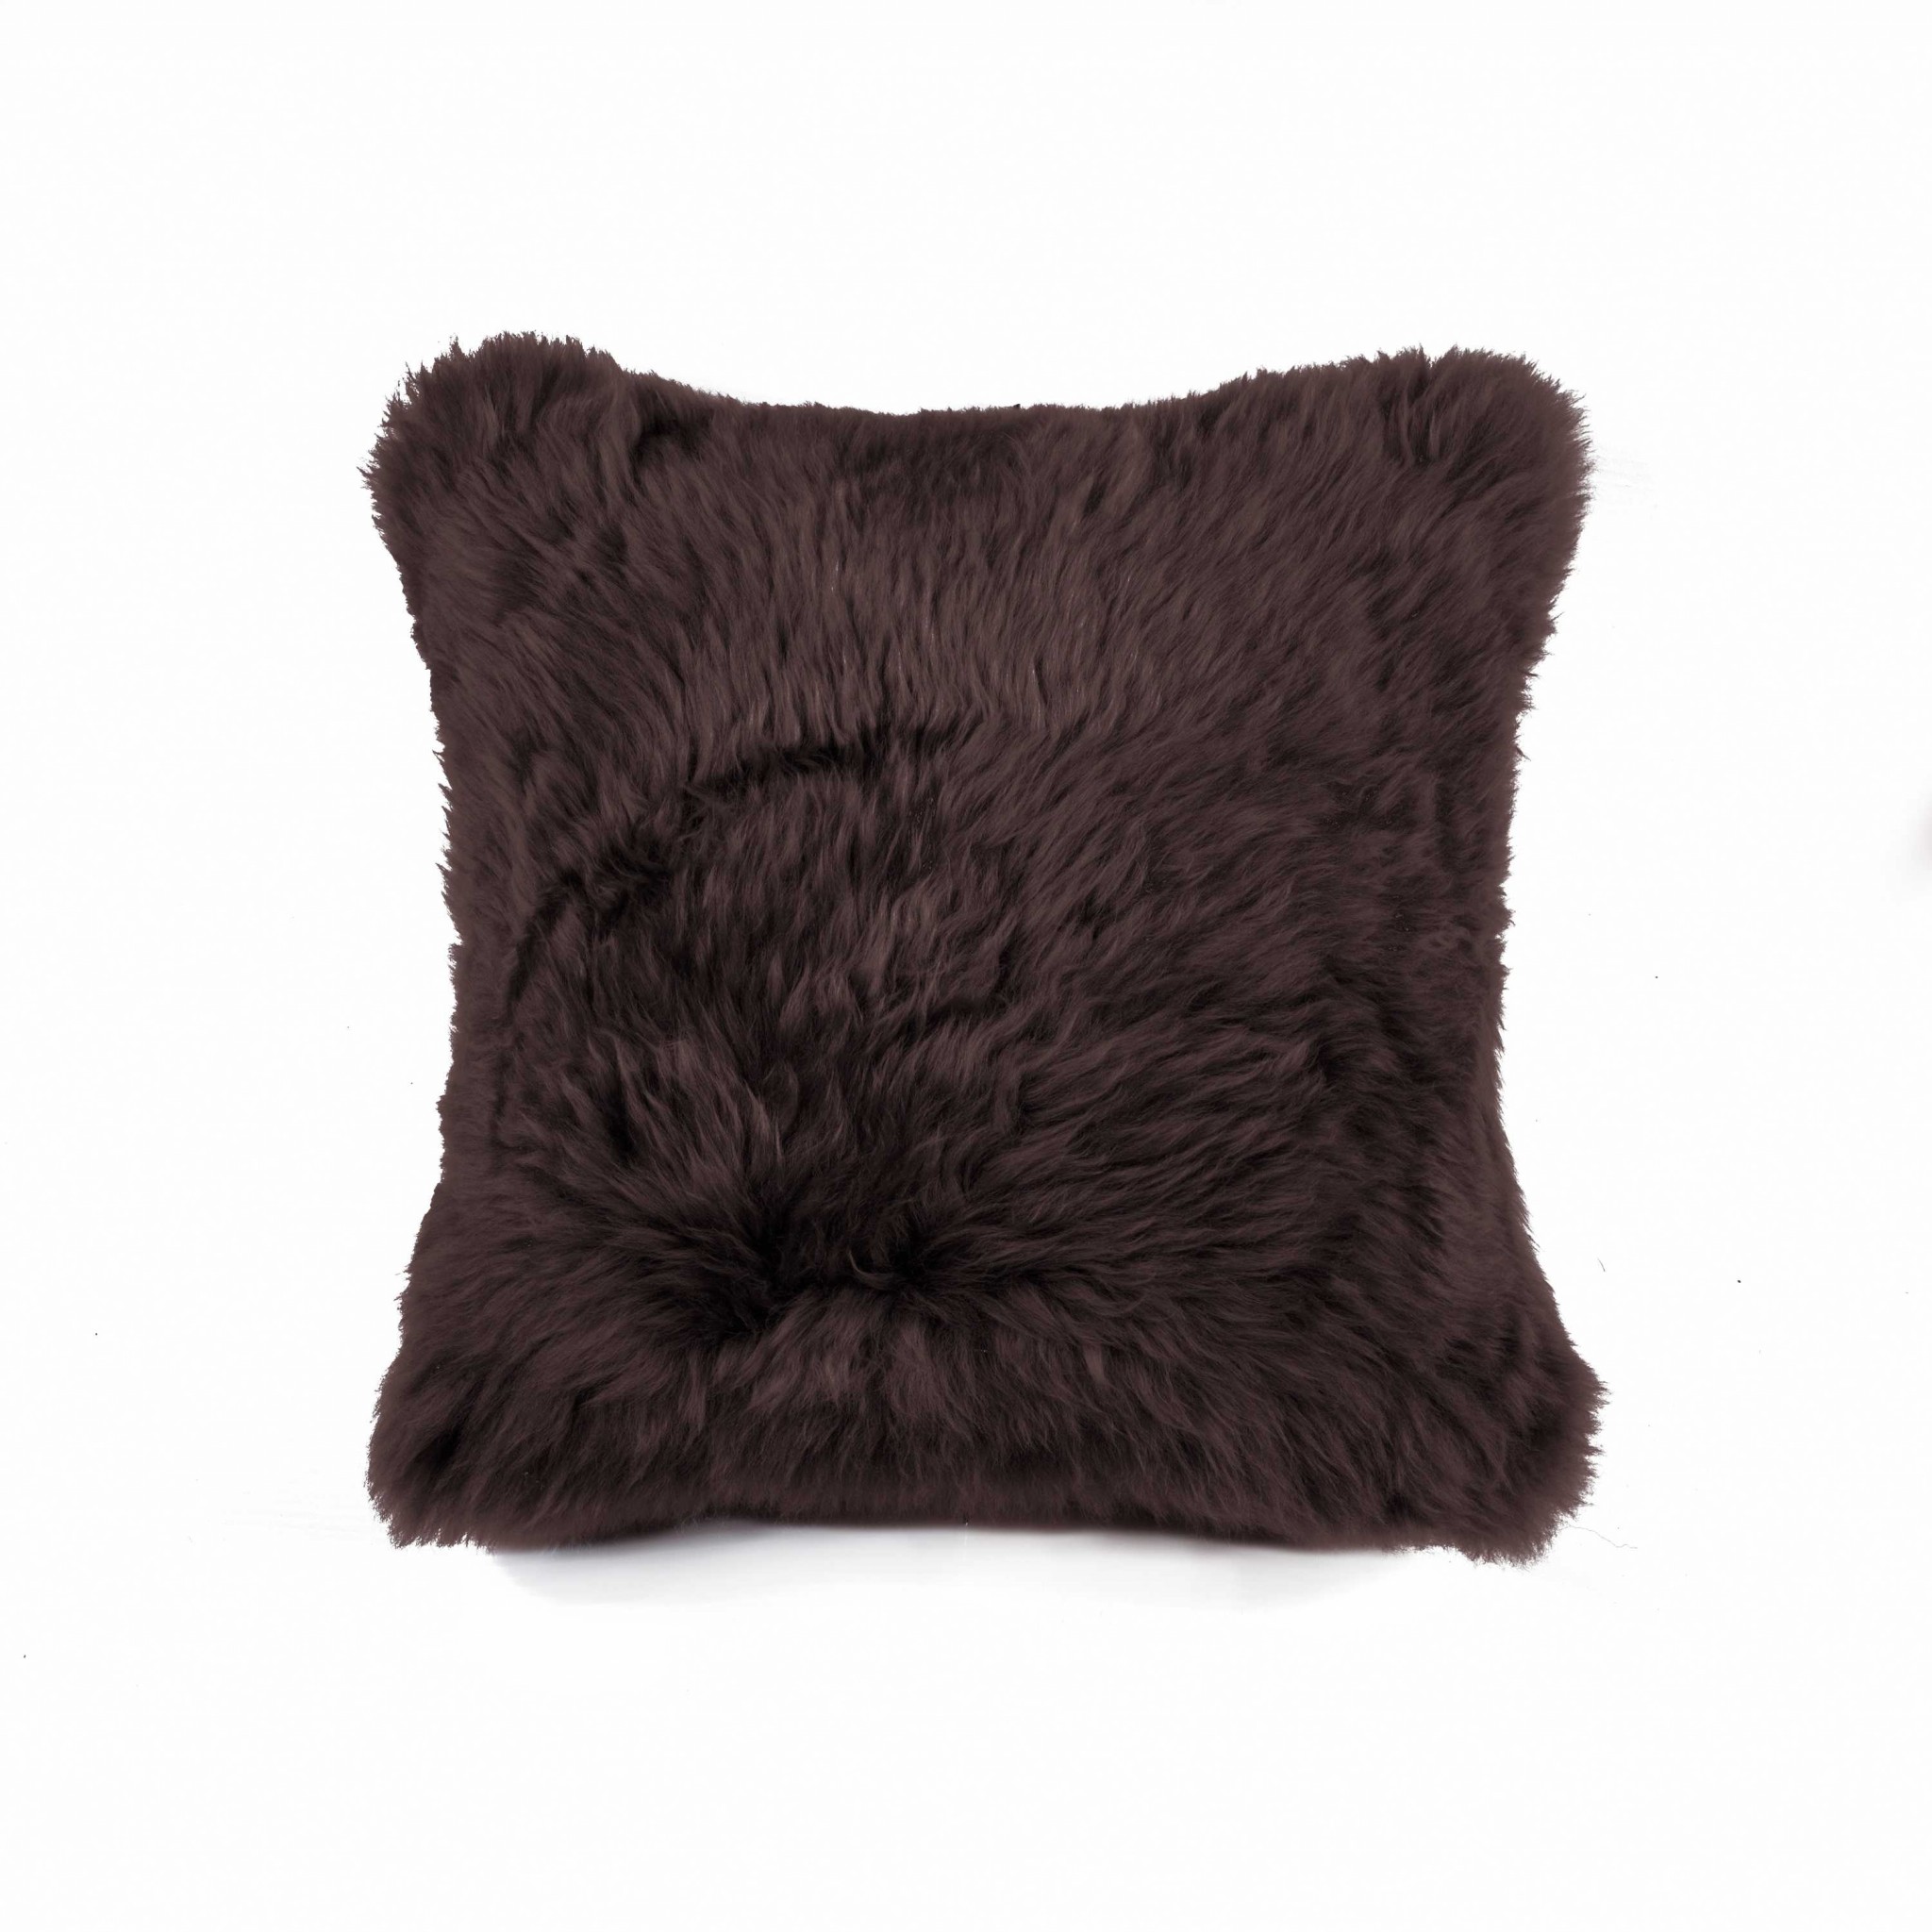 18" x 18" x 5" Chocolate Sheepskin - Pillow